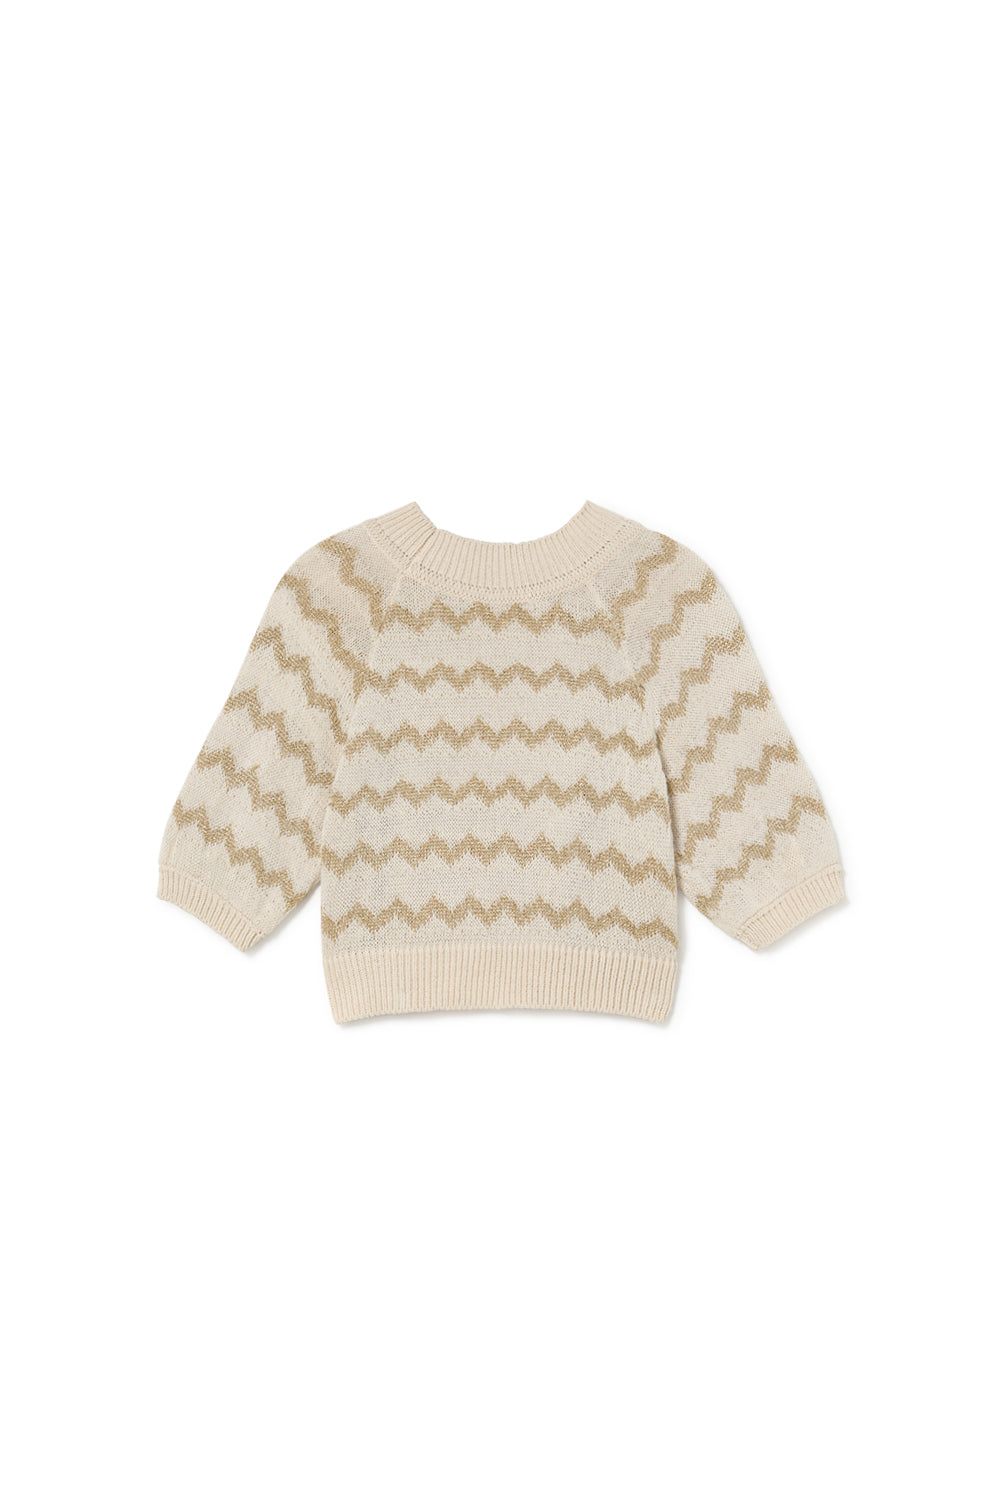 Little Creative Factory Wavy Knit Sweater - Cream